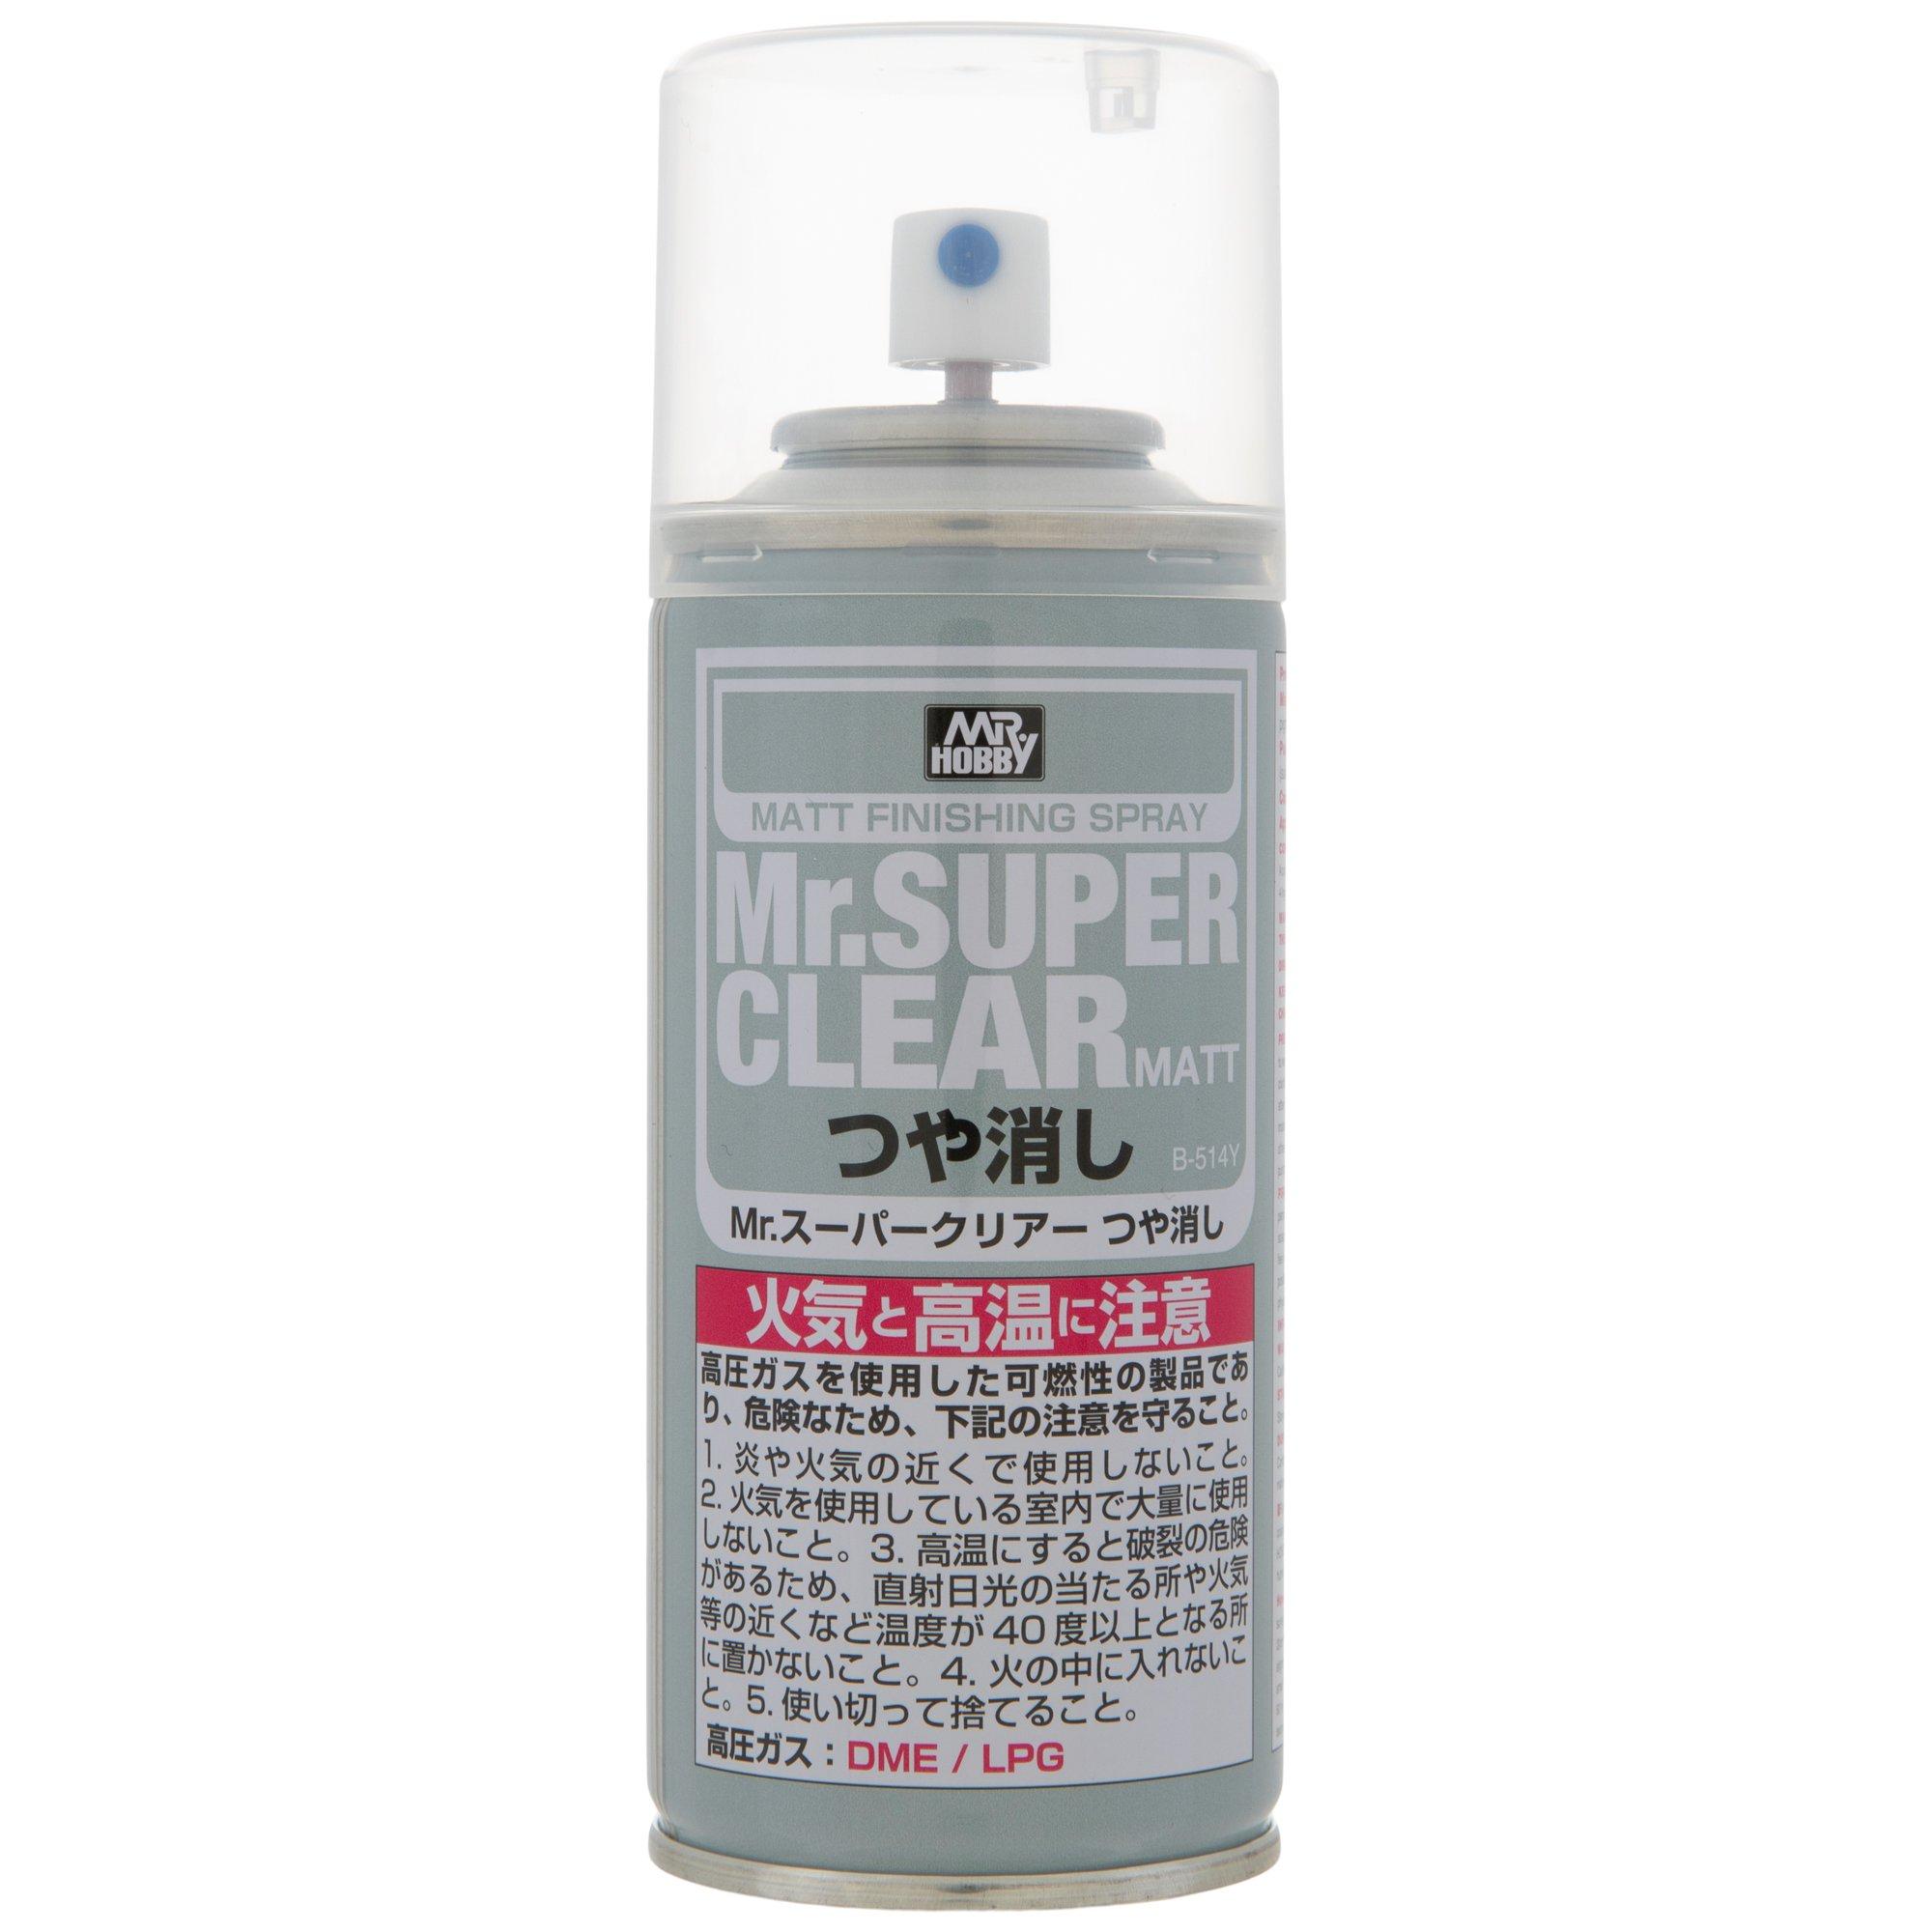  Mr. Super Clear UV Cut Flat Spray : Tools & Home Improvement